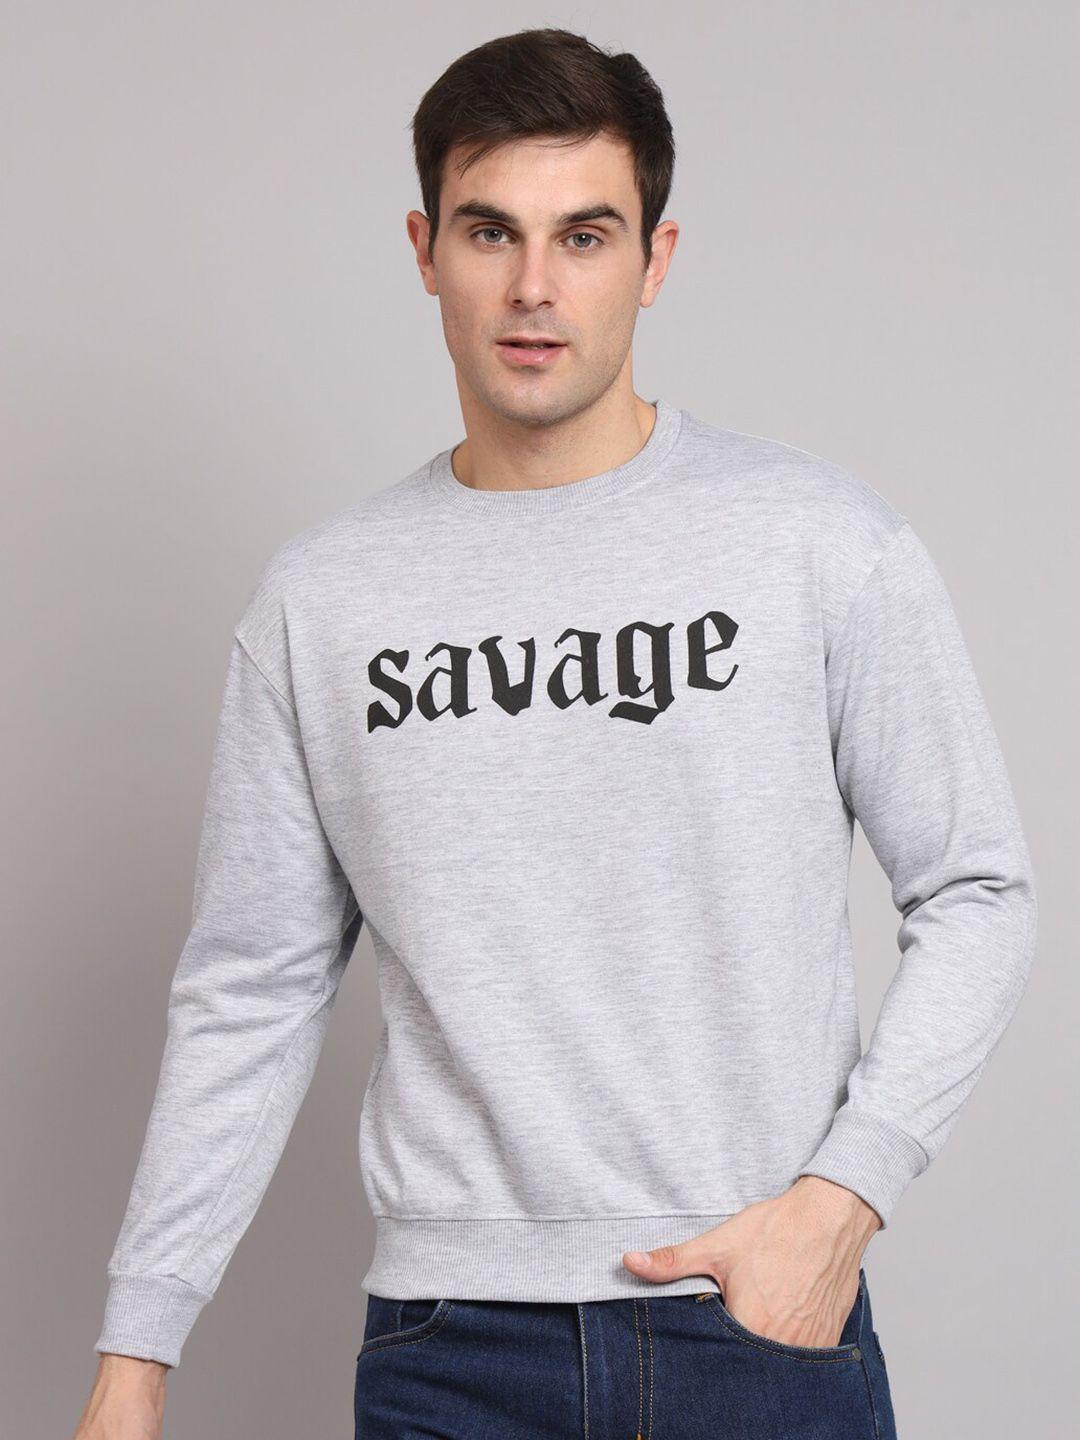 obaan typography printed cotton pullover sweatshirt